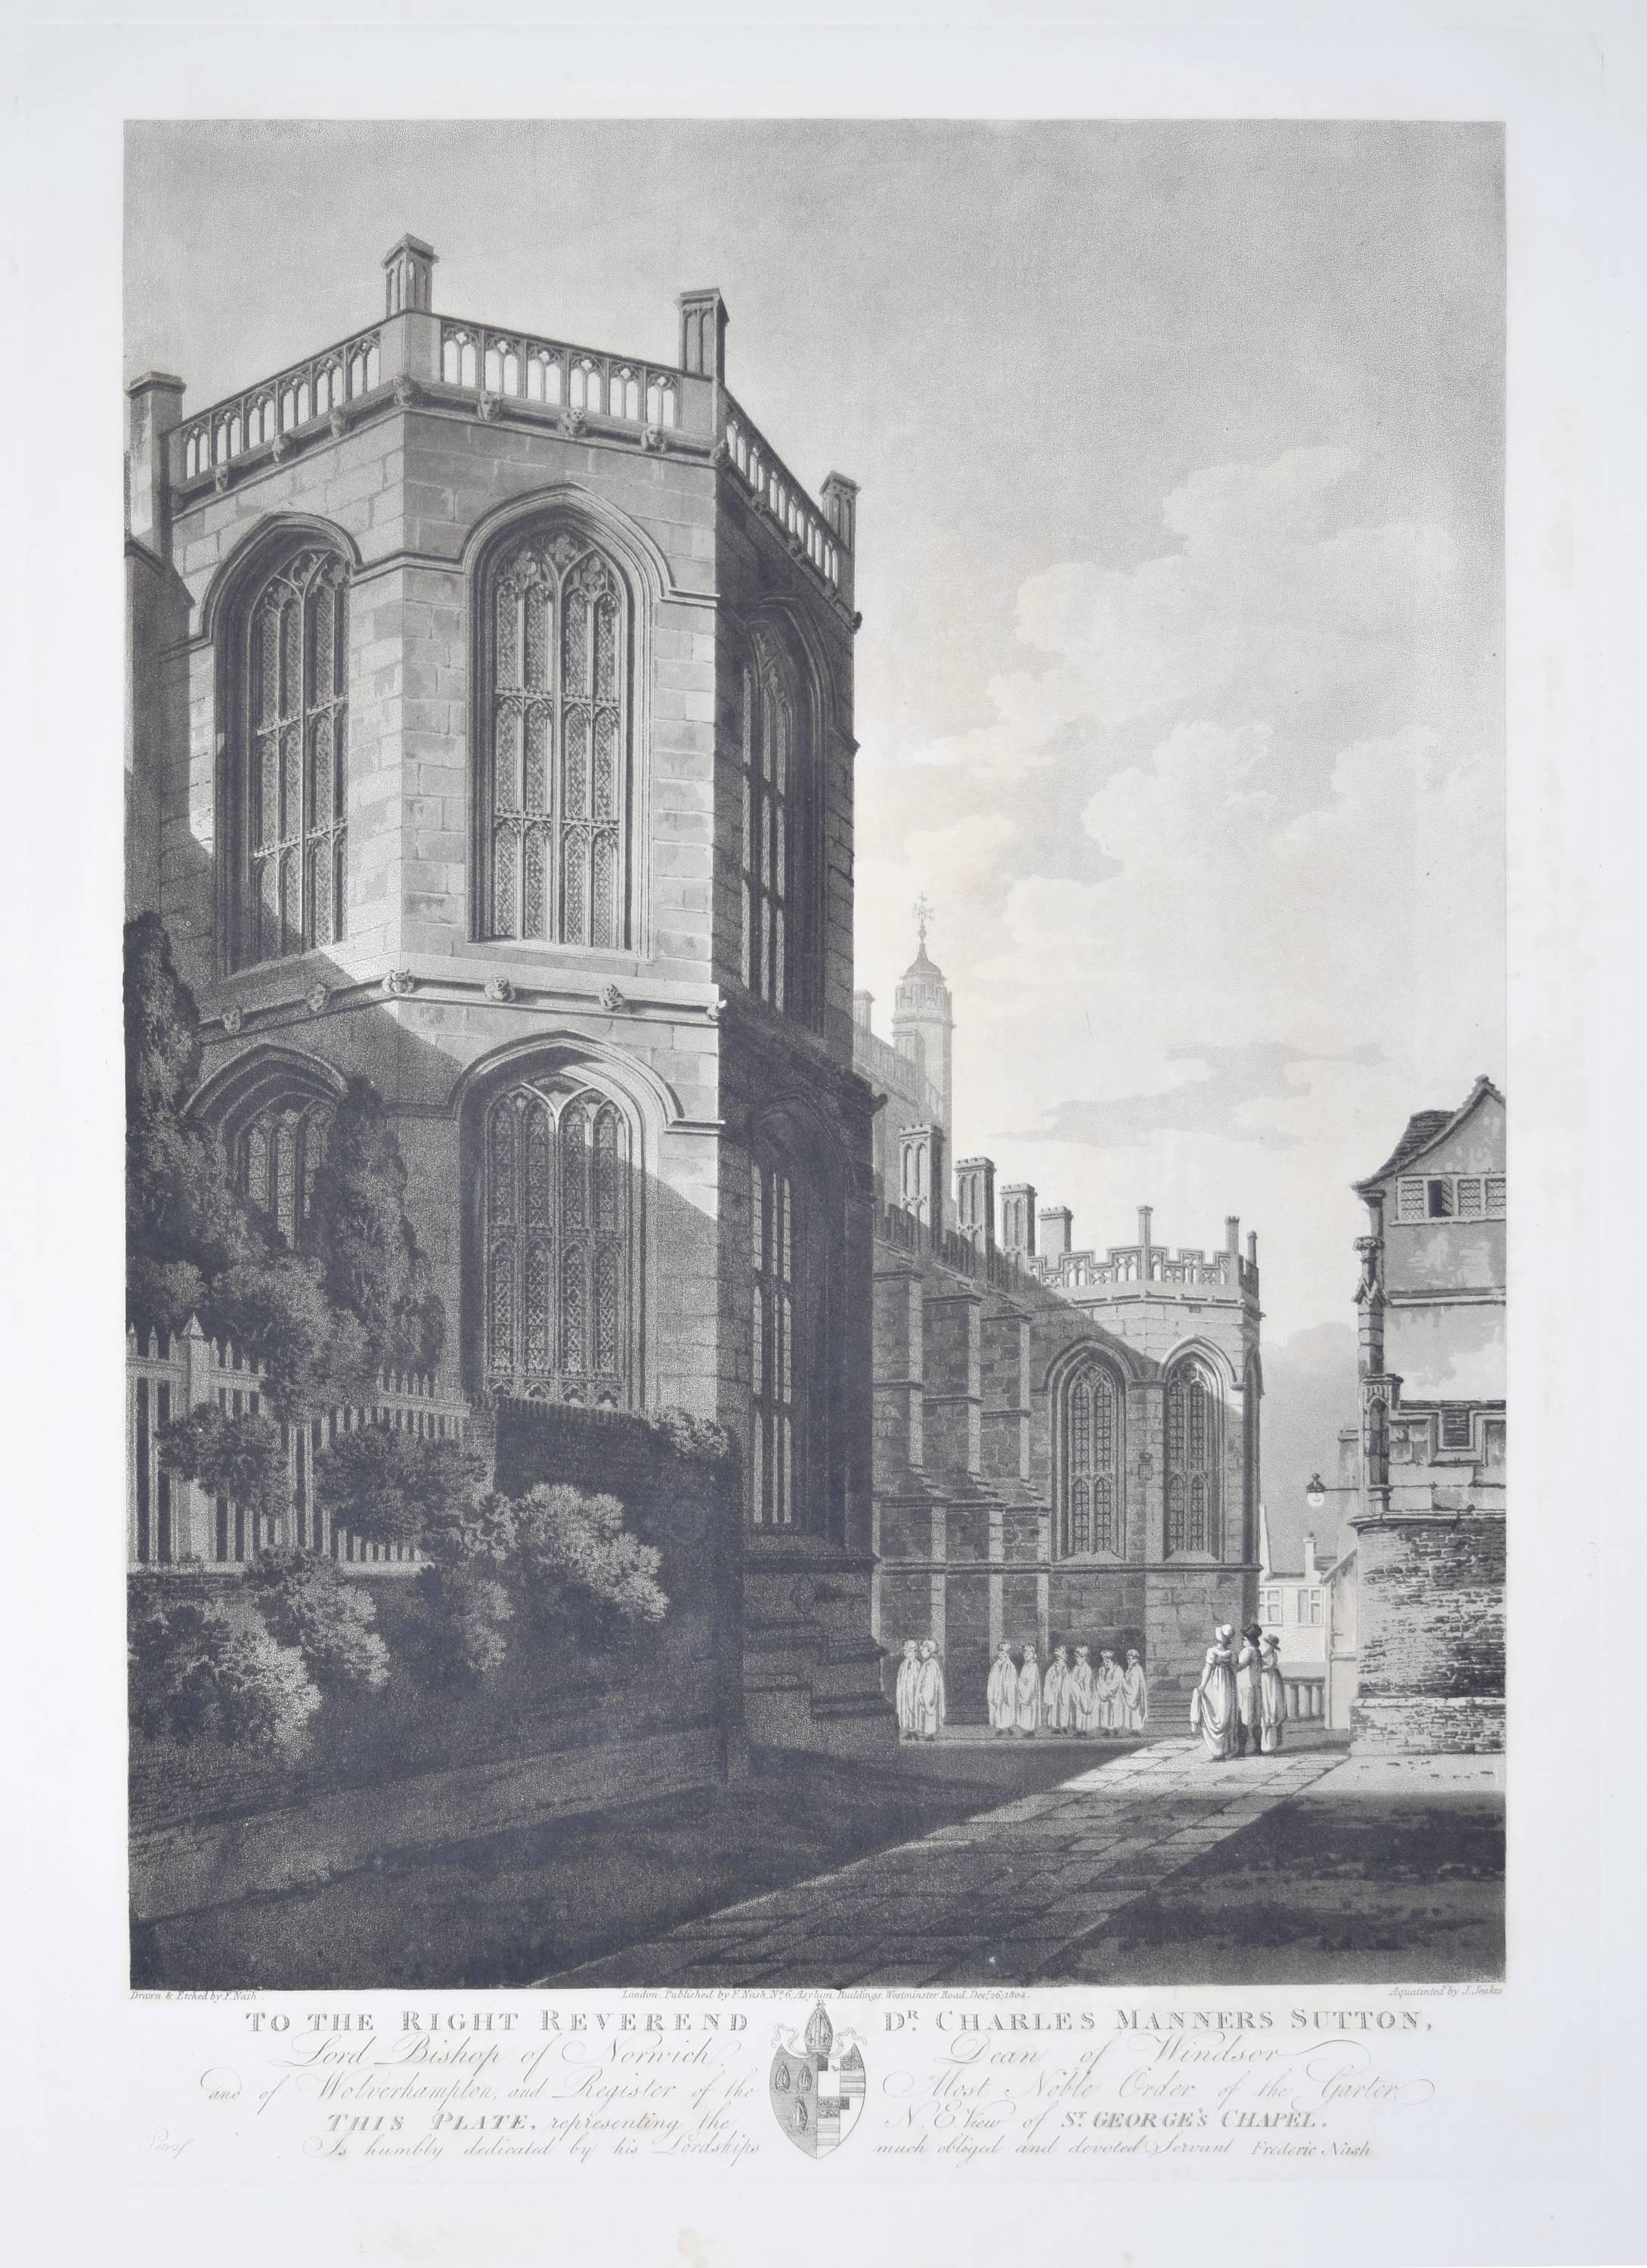 1804 St George's Chapel Windsor Castle print